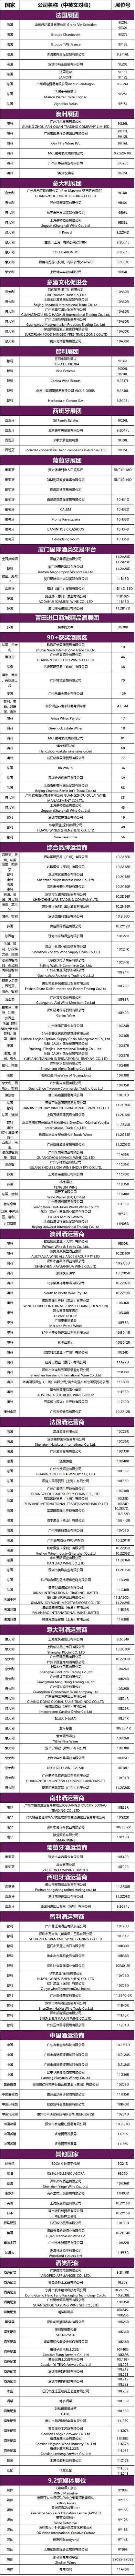 Interwine葡萄酒展部分展商名单